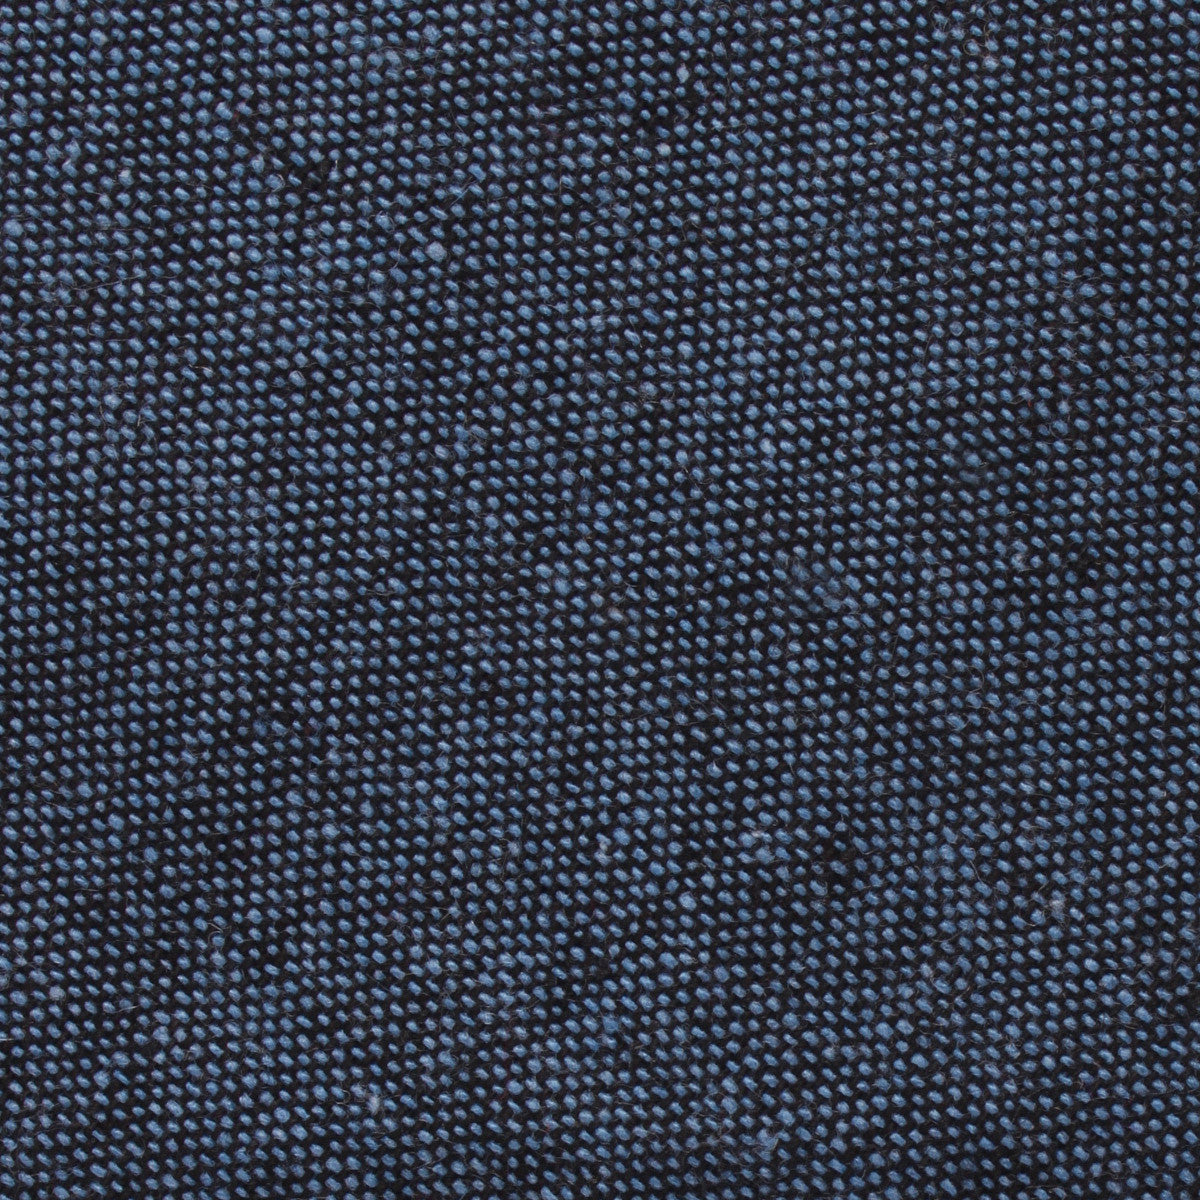 Blue & Black Textured Linen Blend Fabric Skinny Tie